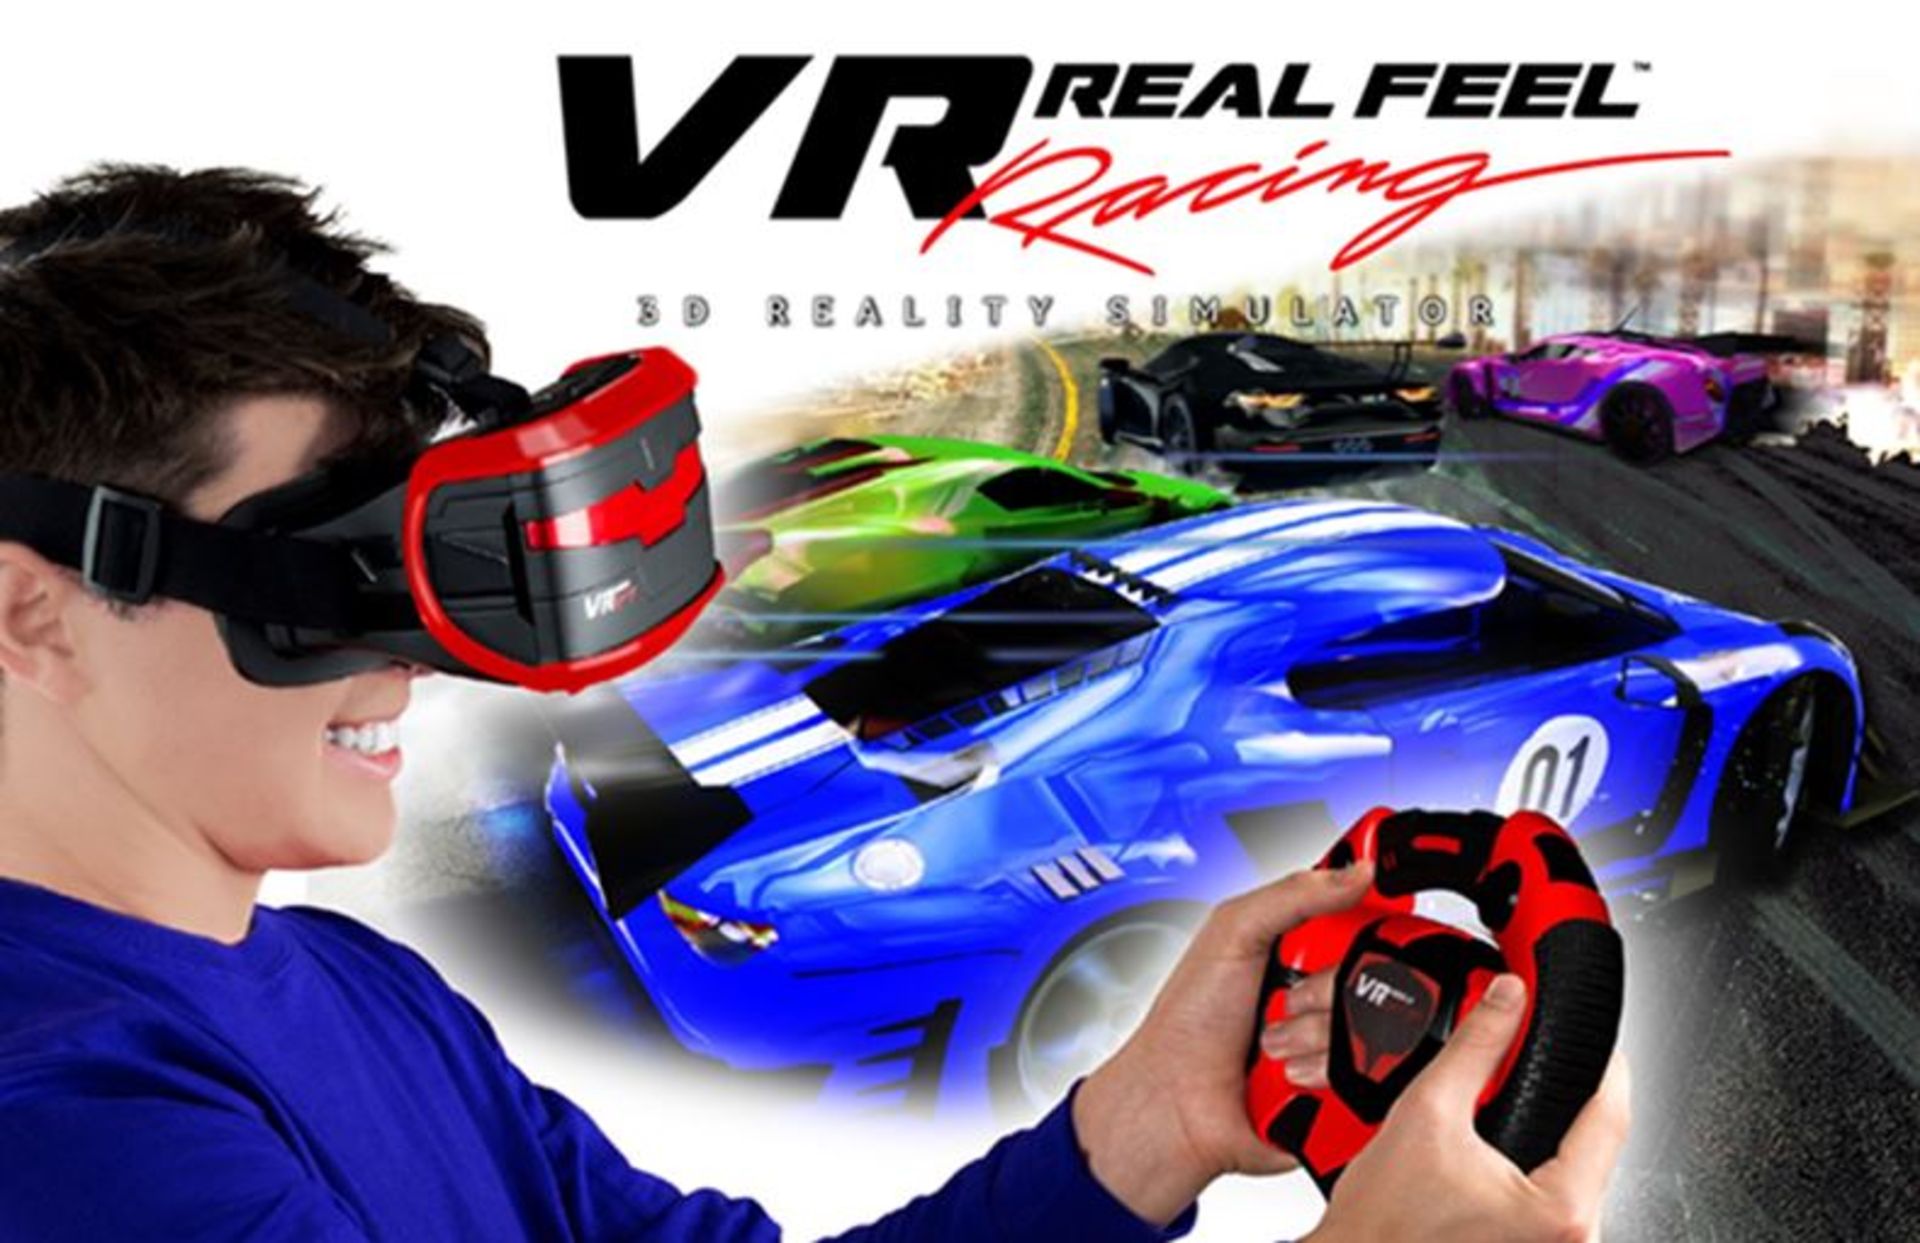 (R1J) 4x VR Real Feel Racing 3D Reality Simulator